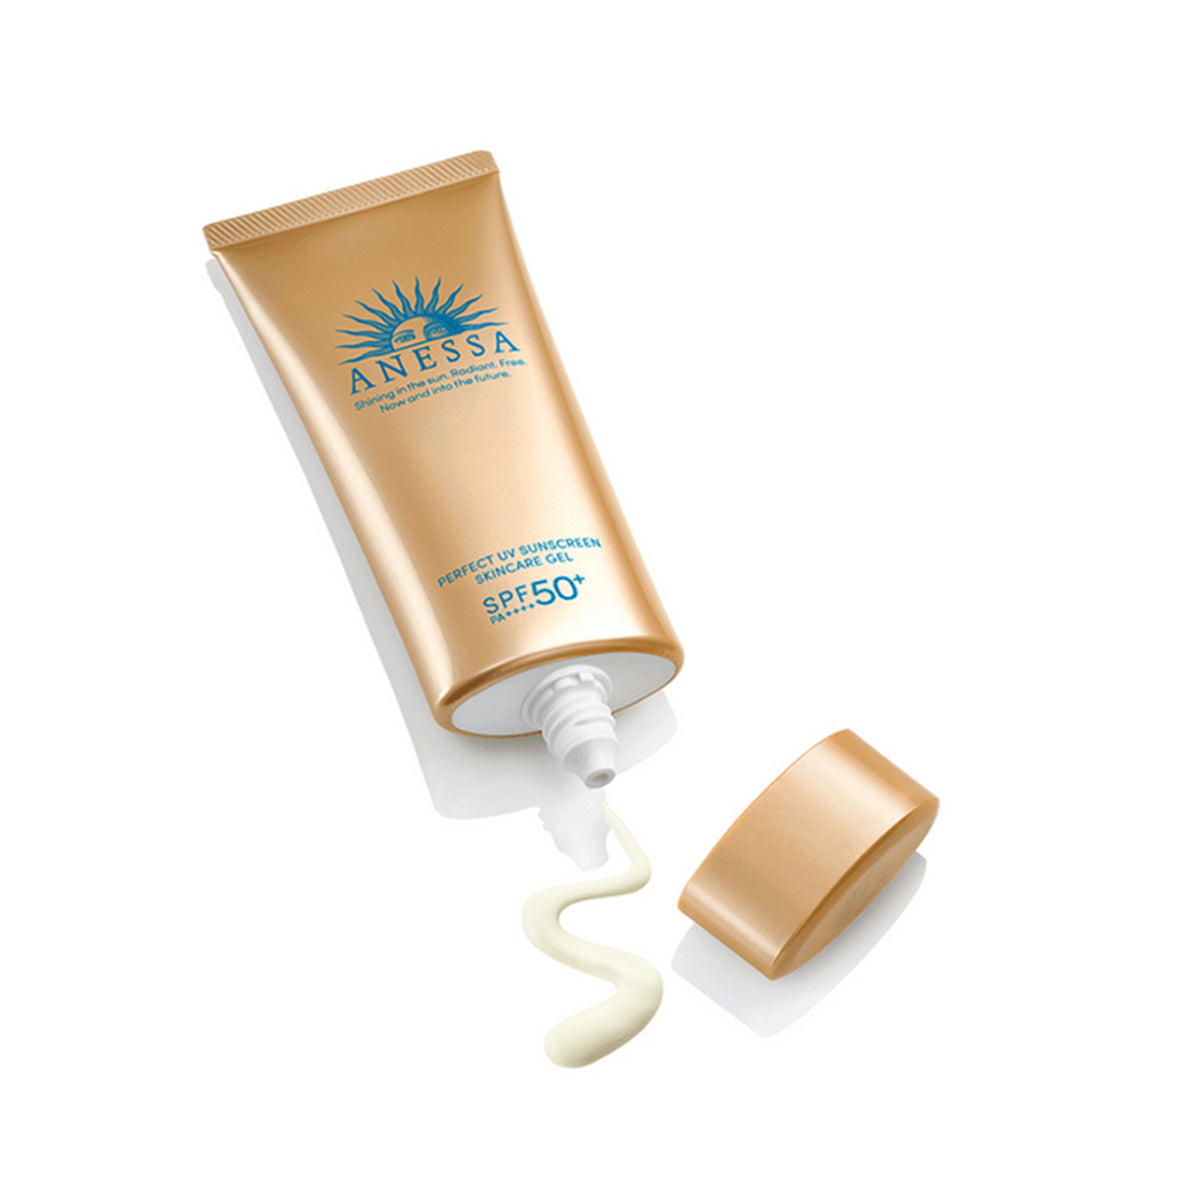 Perfect UV Sunscreen Skincare Gel N SPF50+ PA++++ 90g